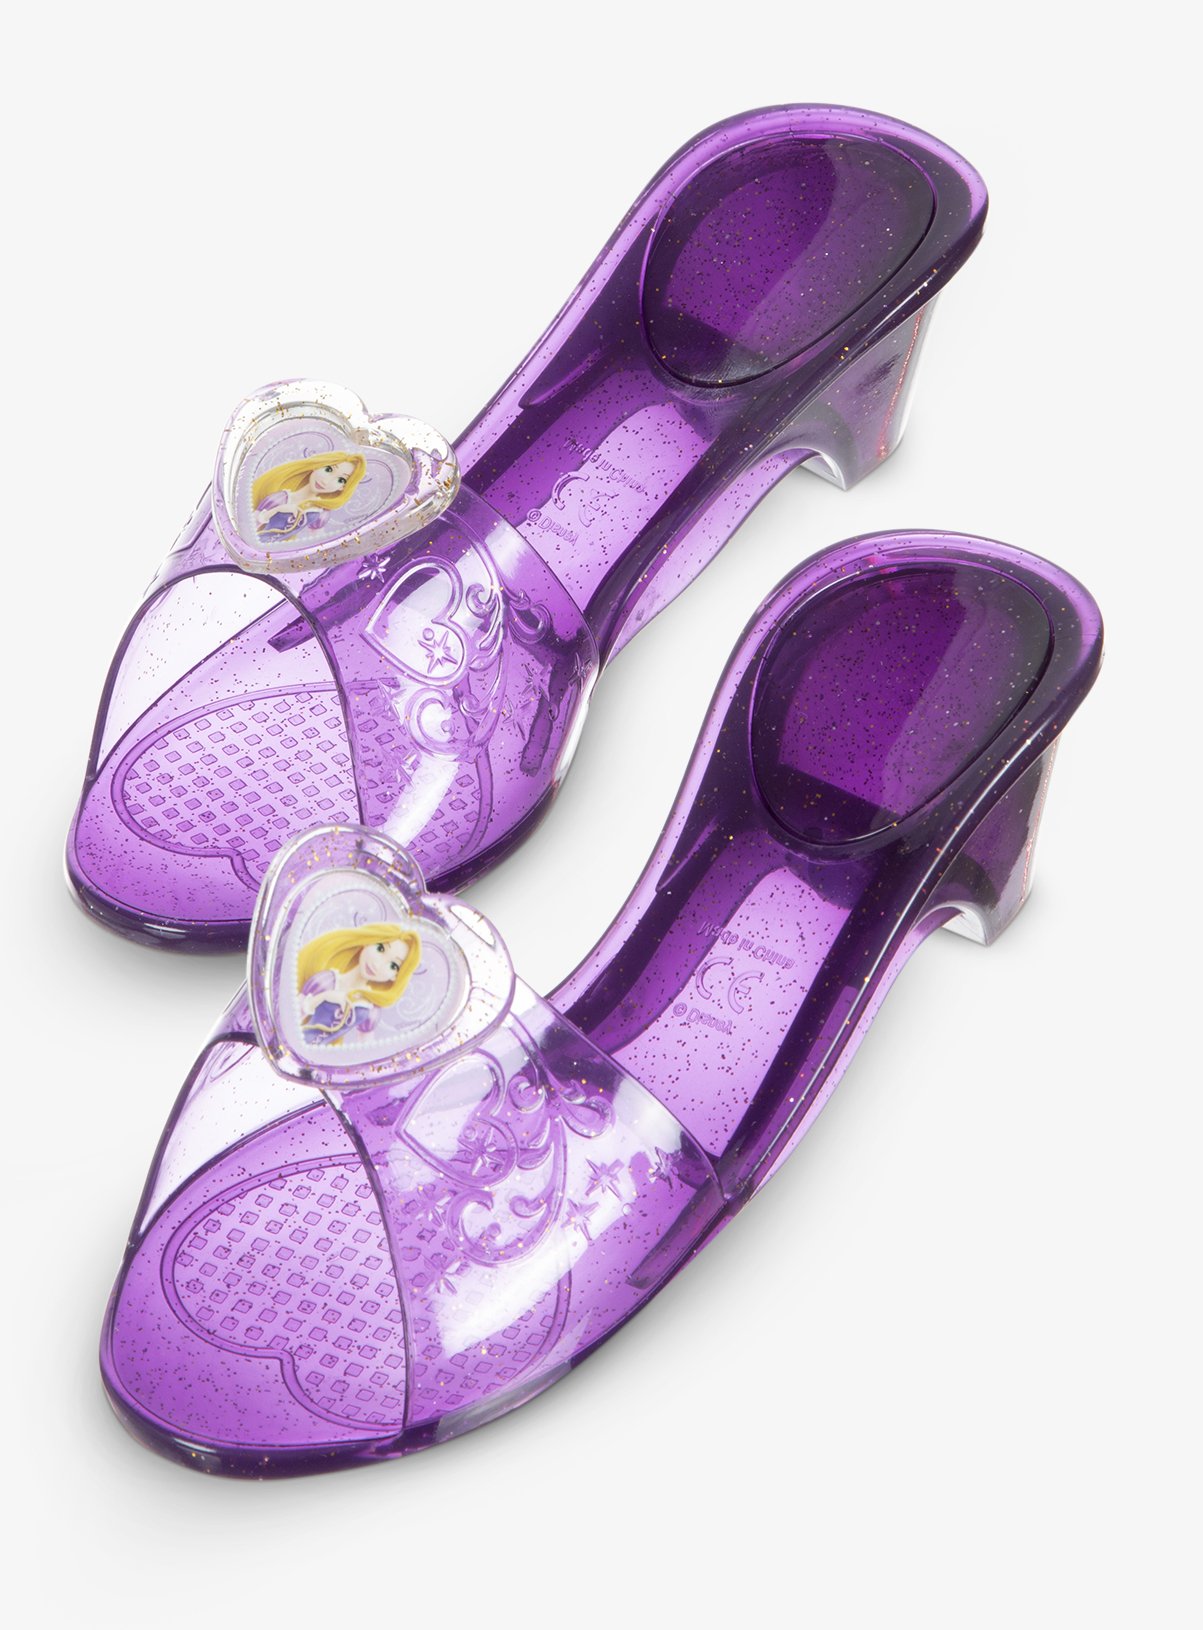 RUBIE'S Disney Princess Rapunzel Purple Jelly Shoes Review